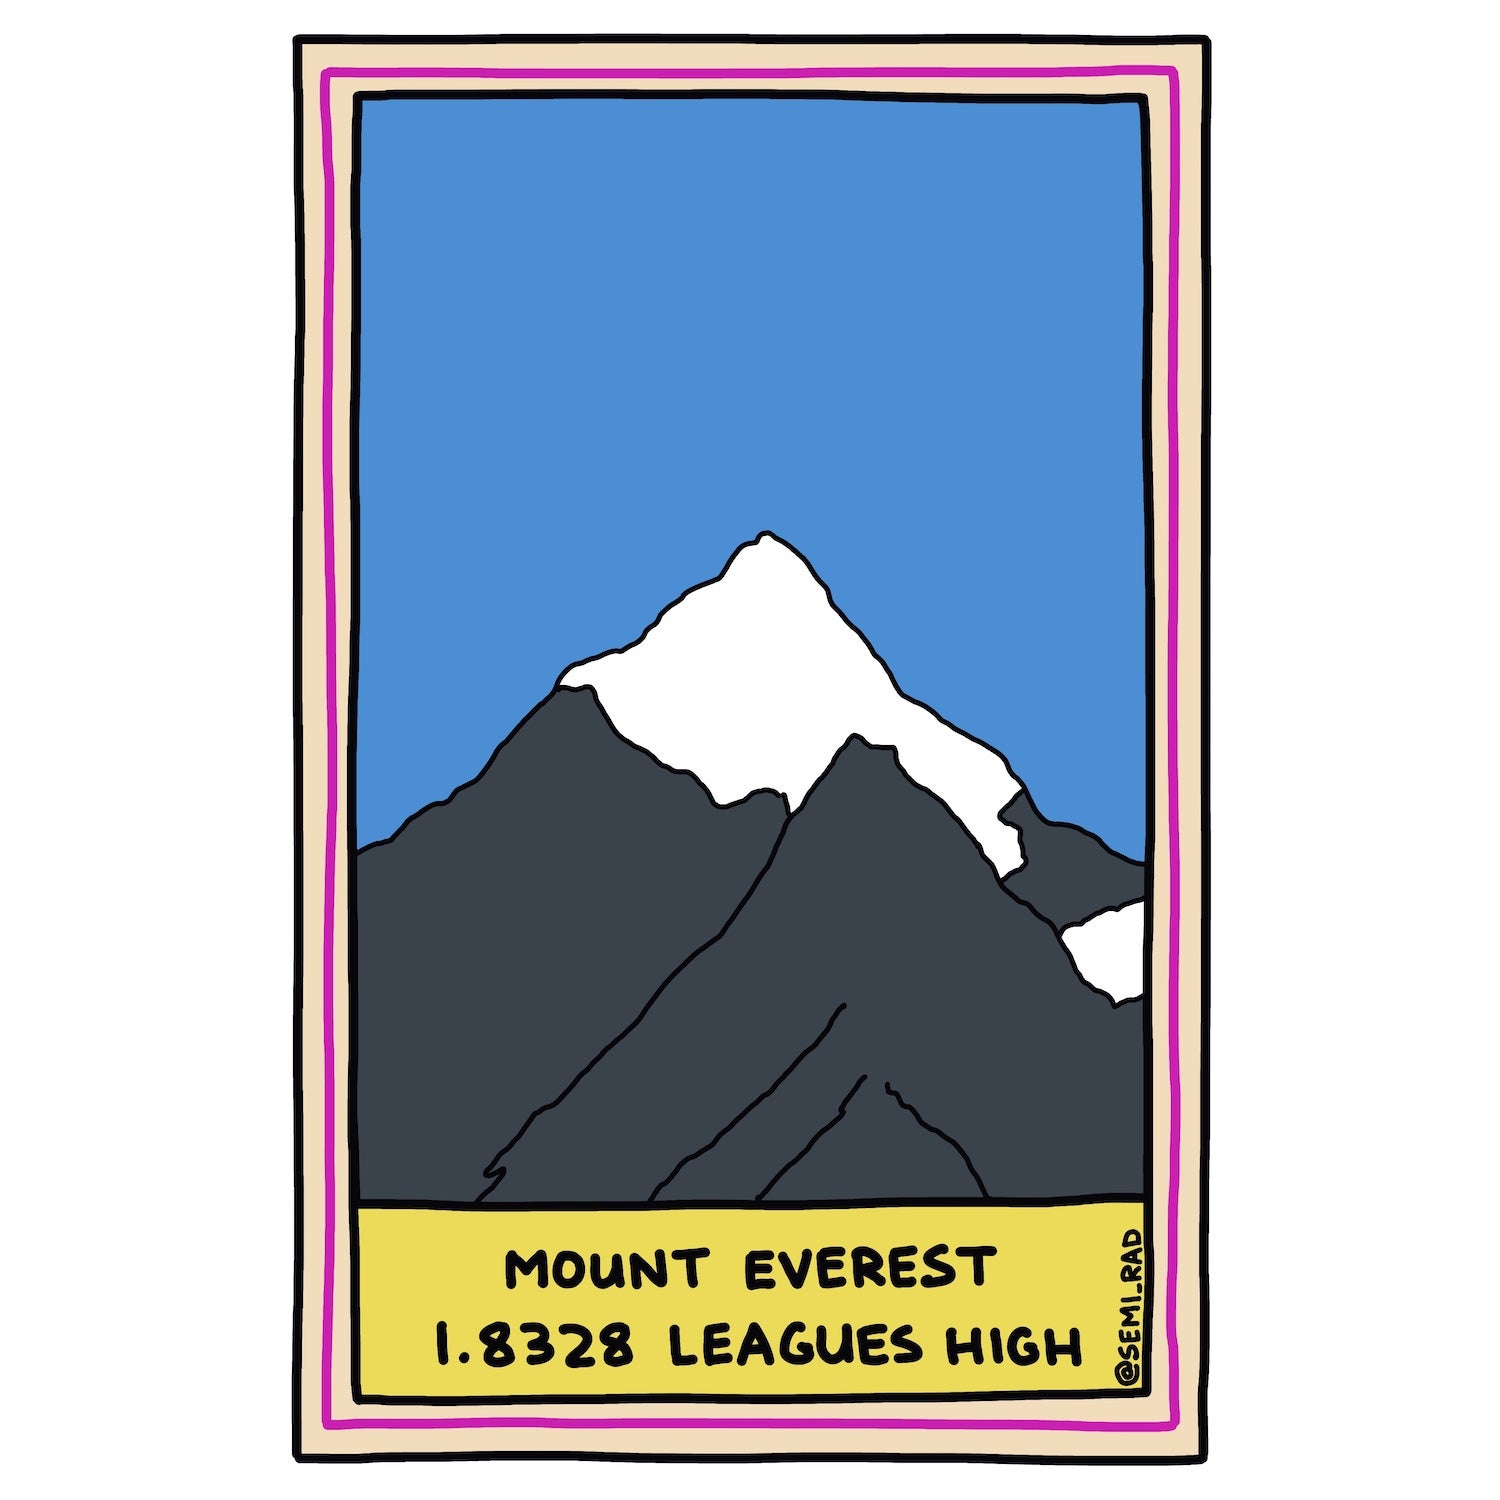 Mount Everest 1.8328 Leagues High